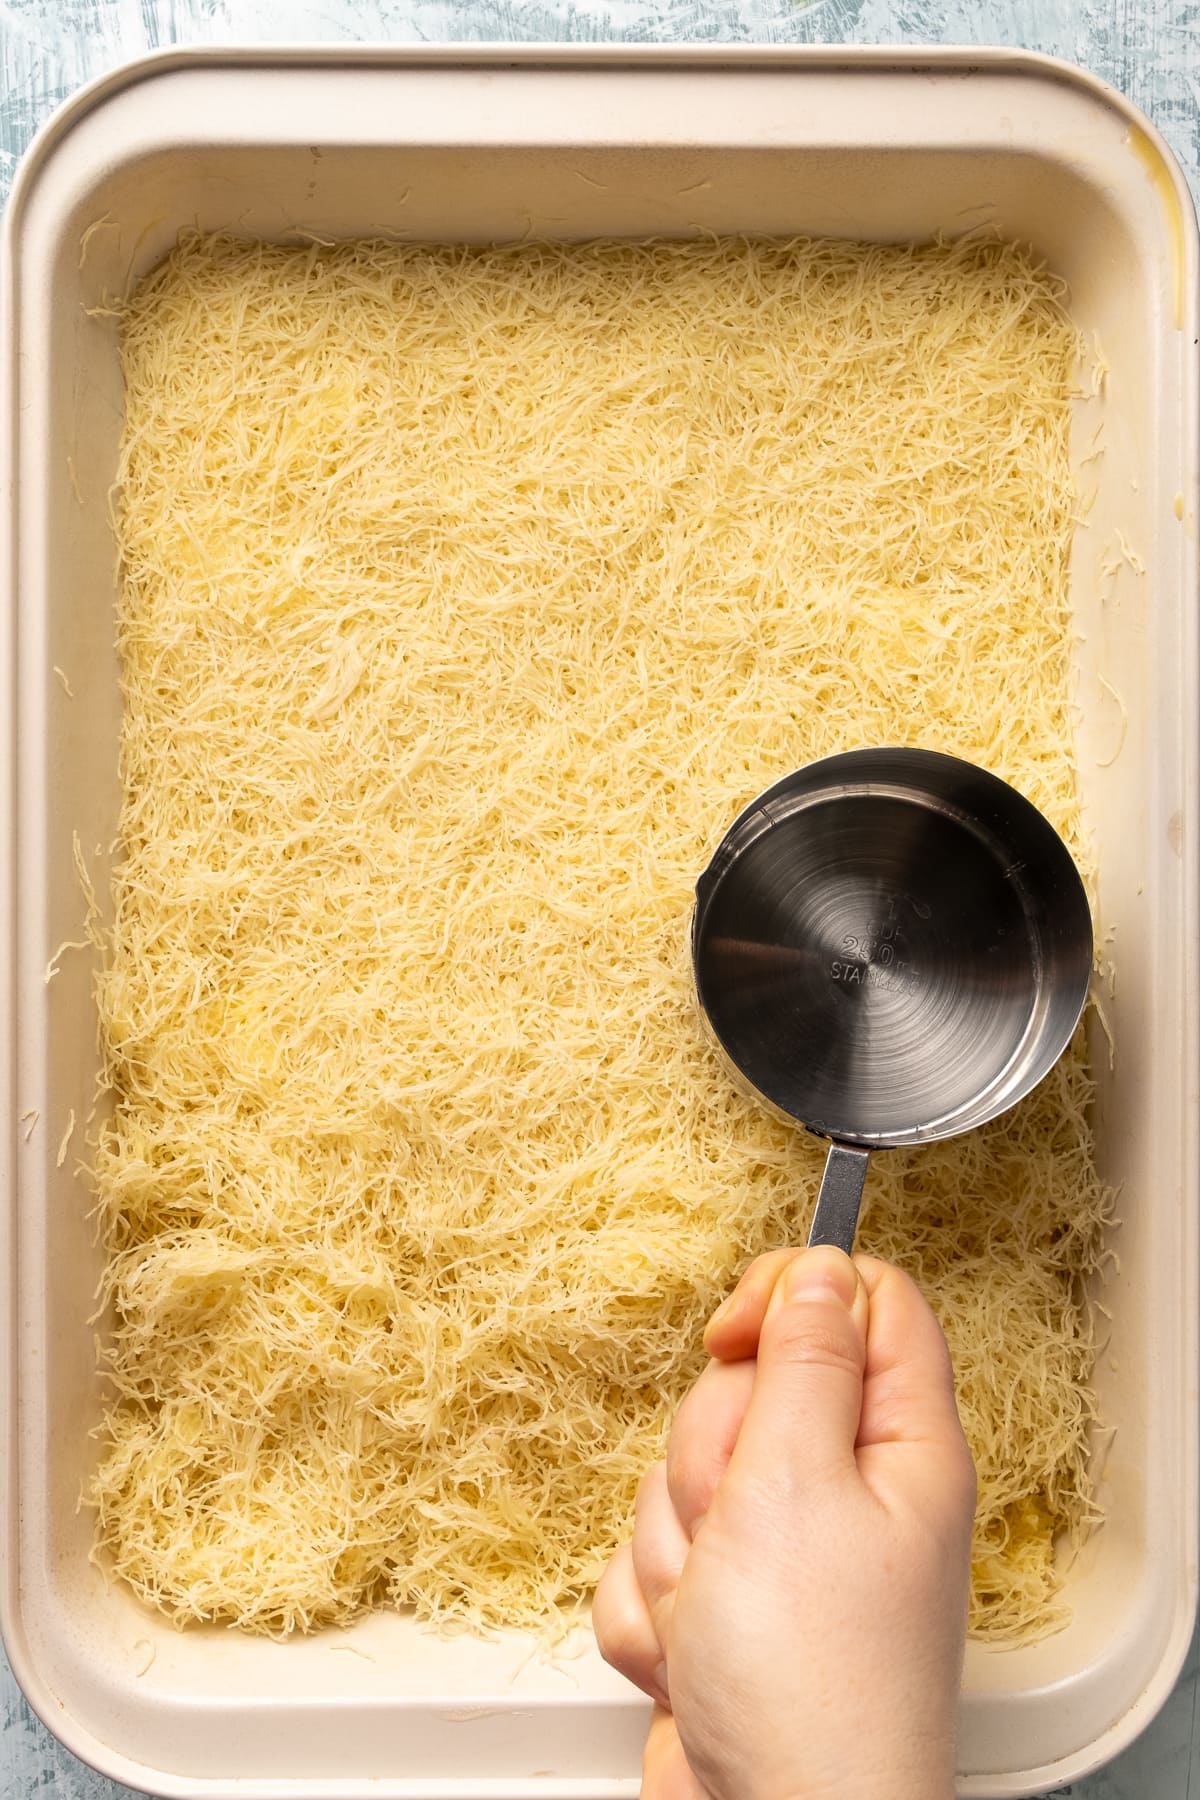 A hand flattening shredded and buttered kadayif noodles in a rectangular baking pan.